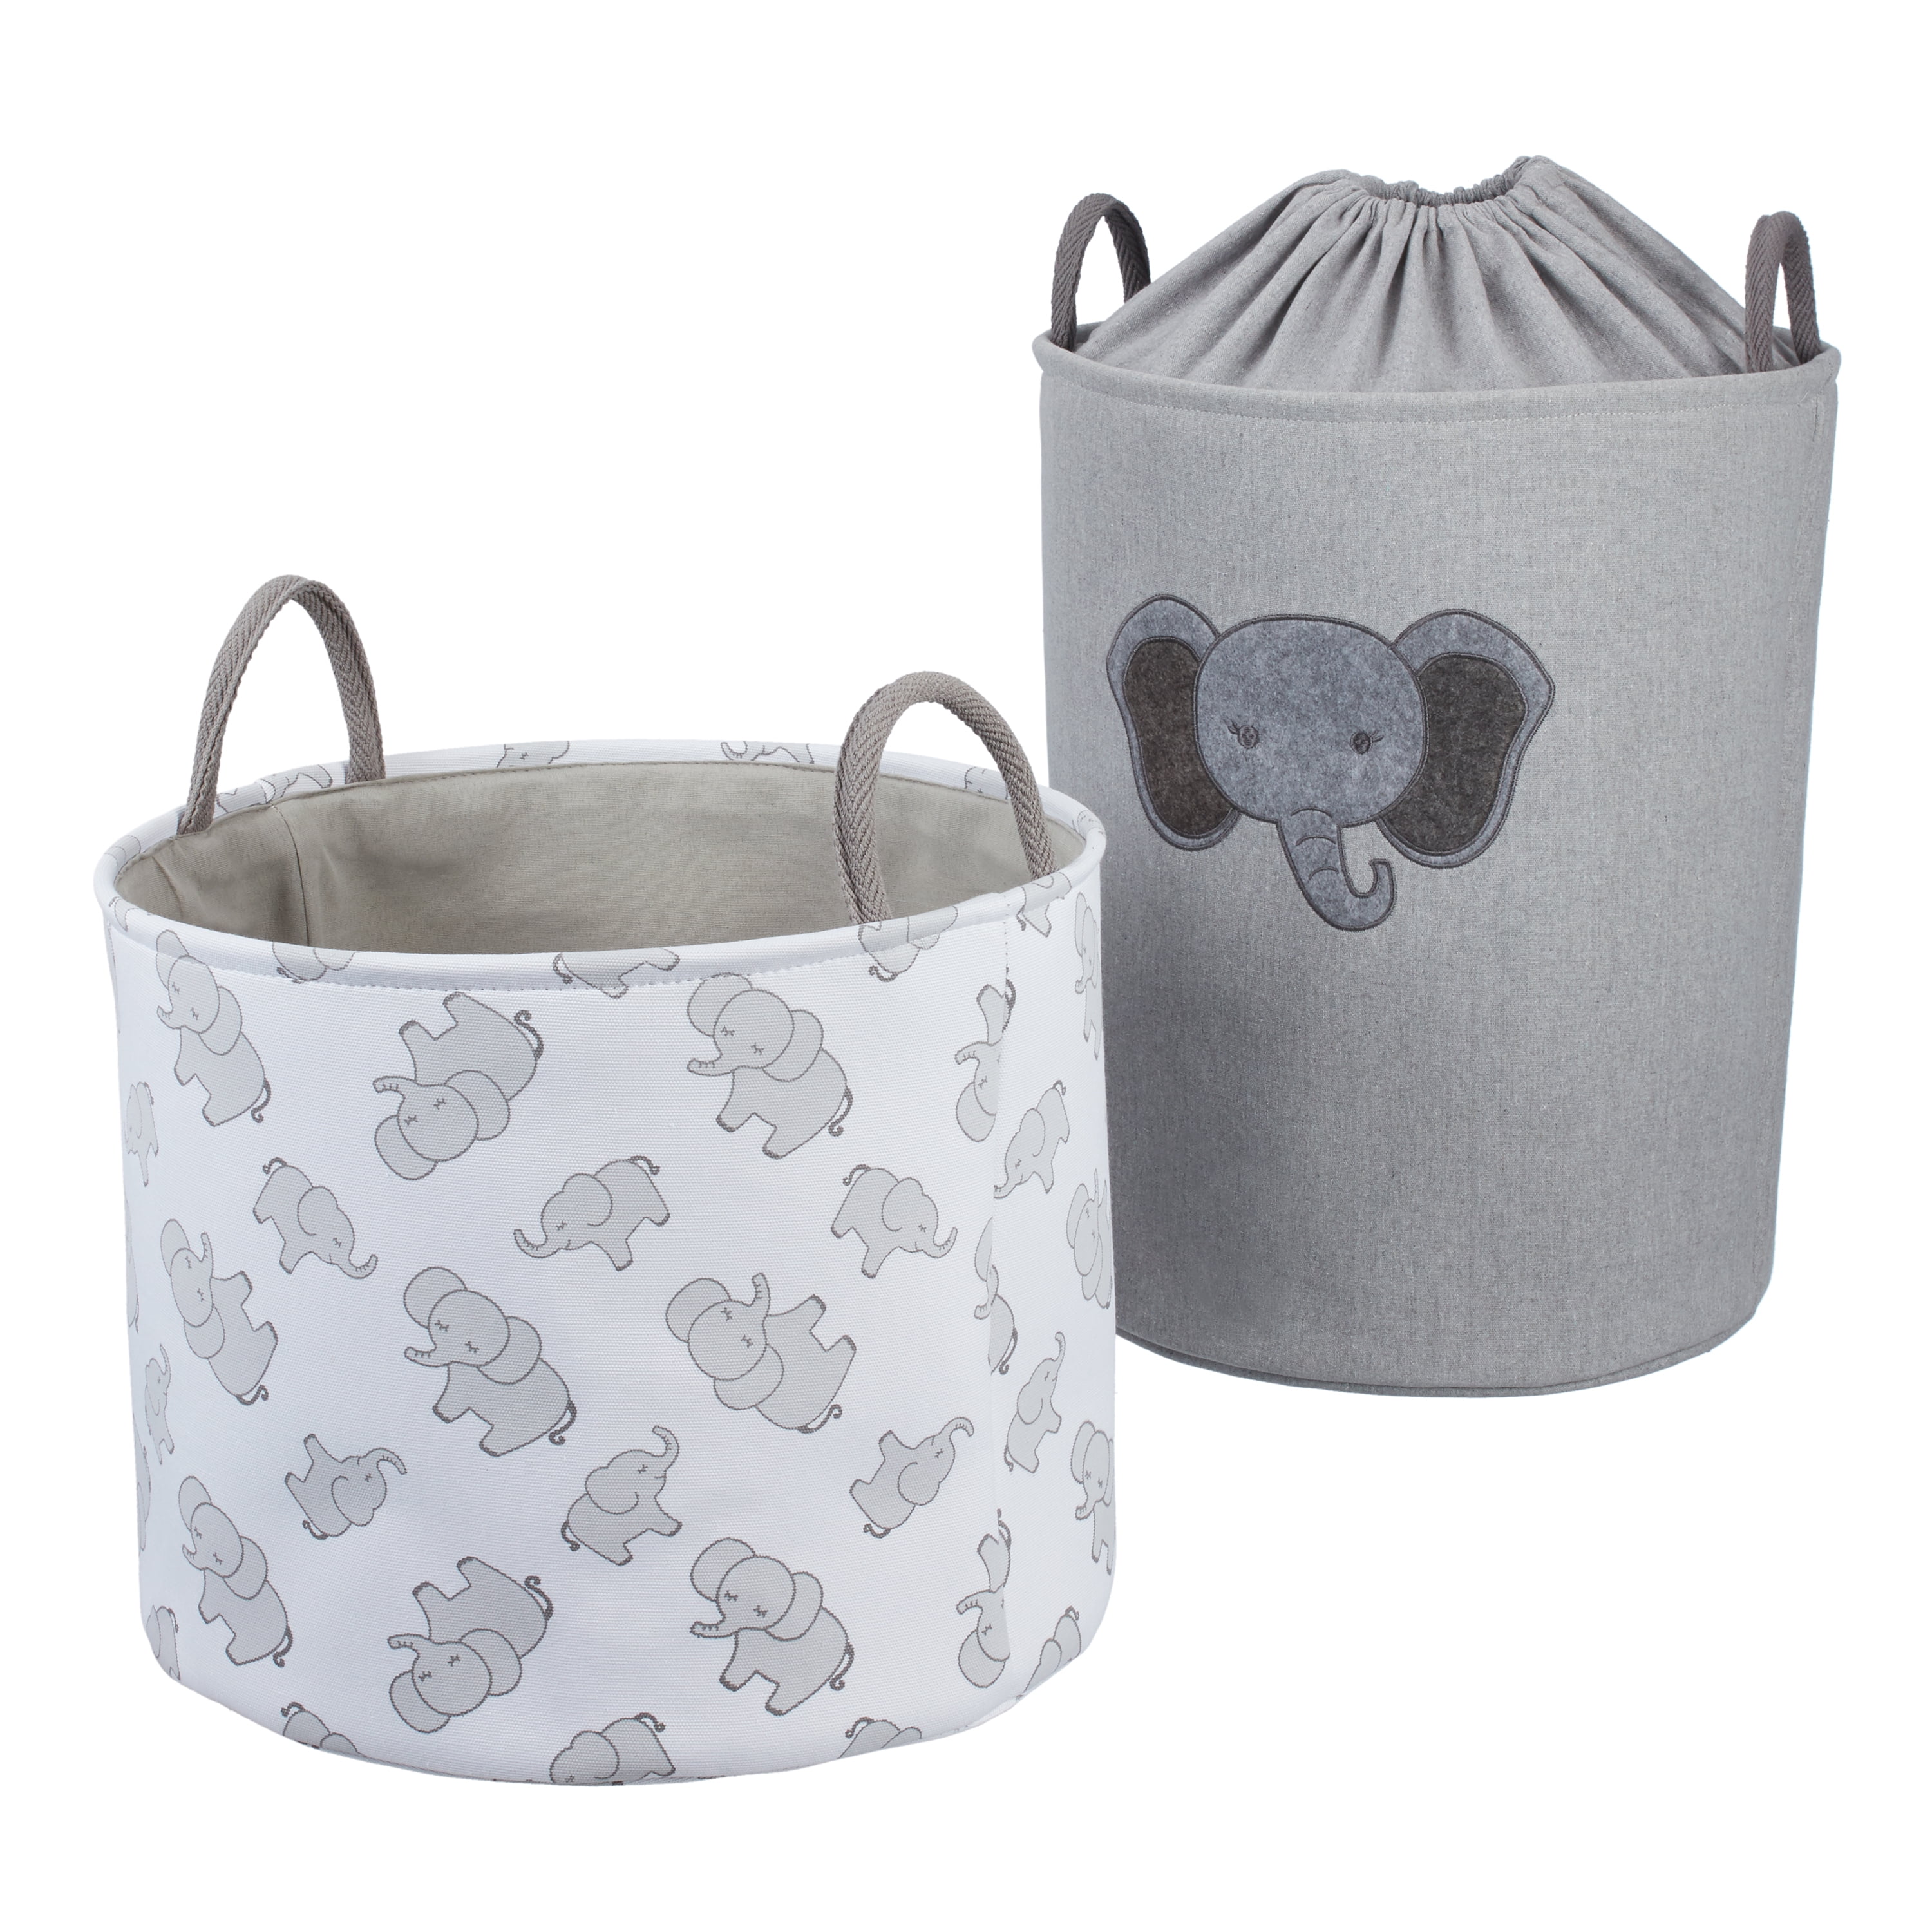 Boys and Girls Hamper/Boxes/Clothing Laundry Hamper/Bathroom/Home Decor/Collapsible Round Storage Bin Elephant MHB Large Storage Baskets